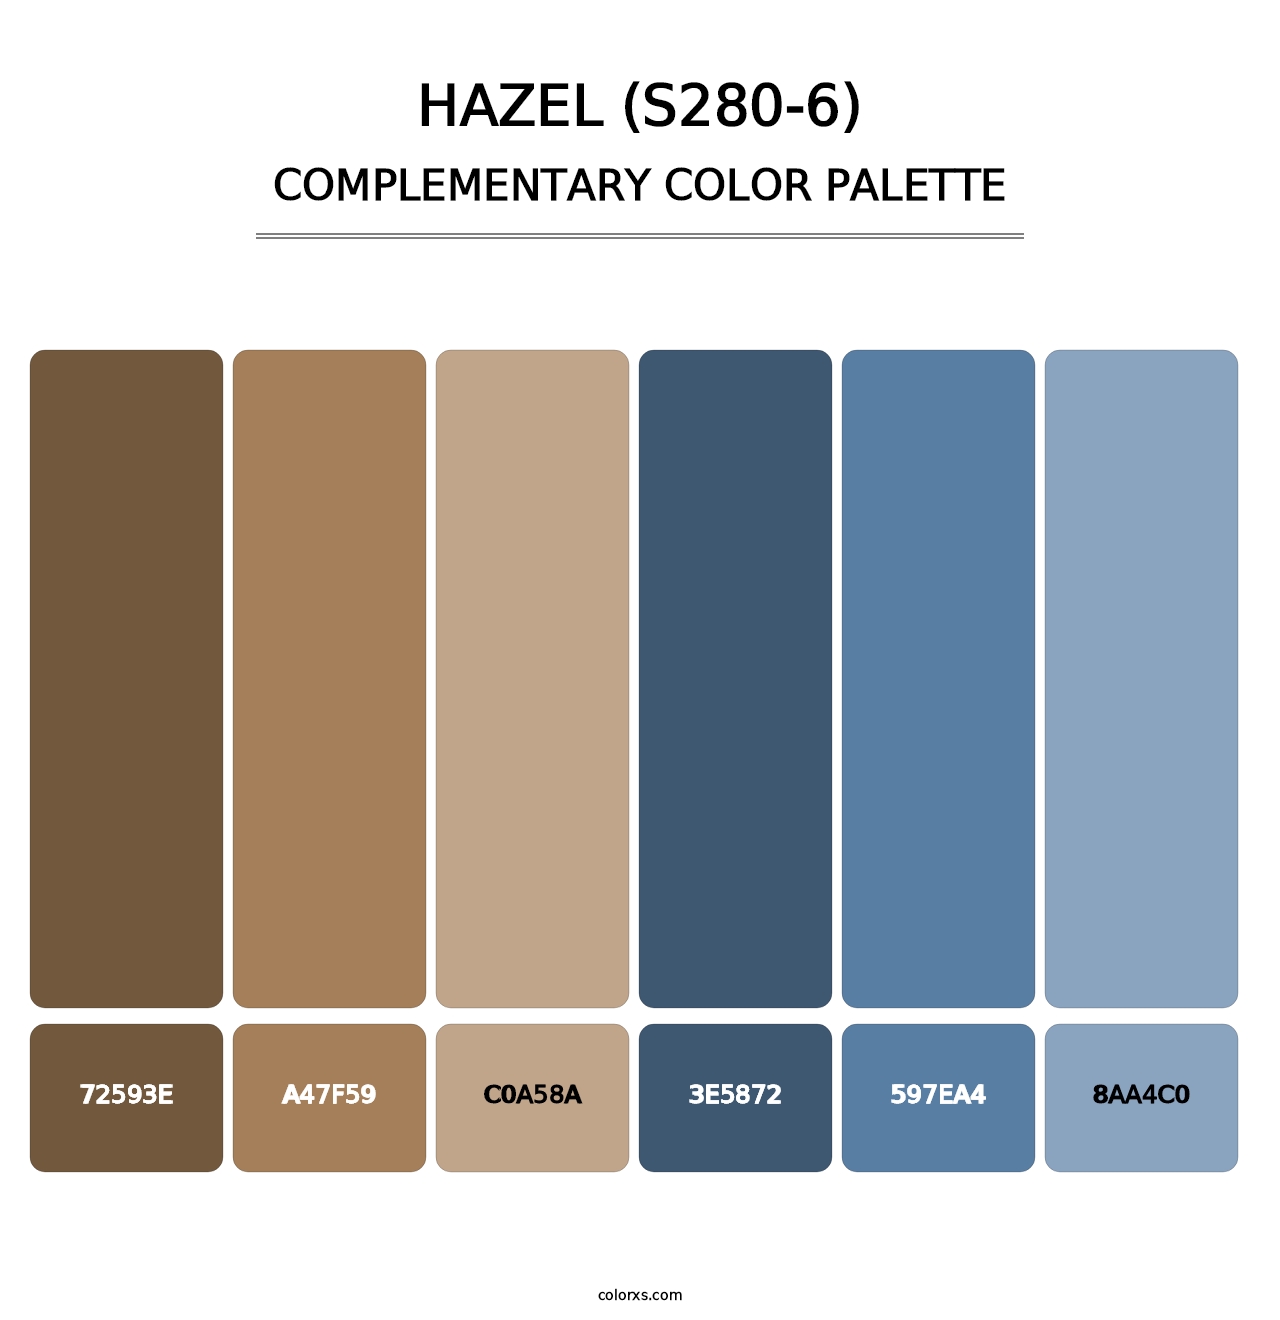 Hazel (S280-6) - Complementary Color Palette